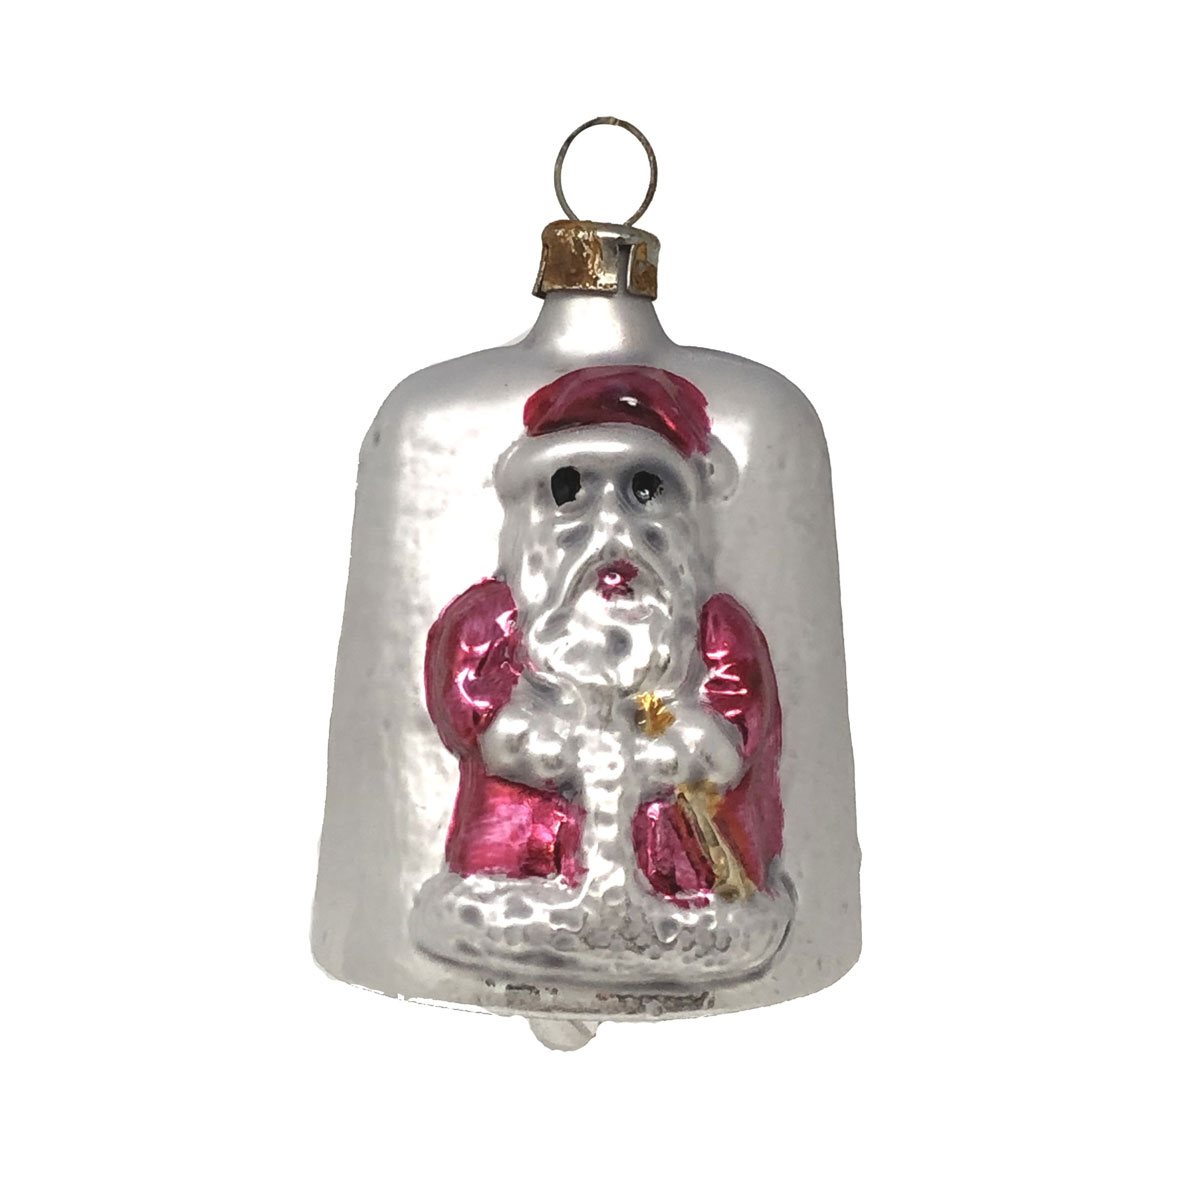 Nostalgie Christbaumkugel Glocke mit Santa